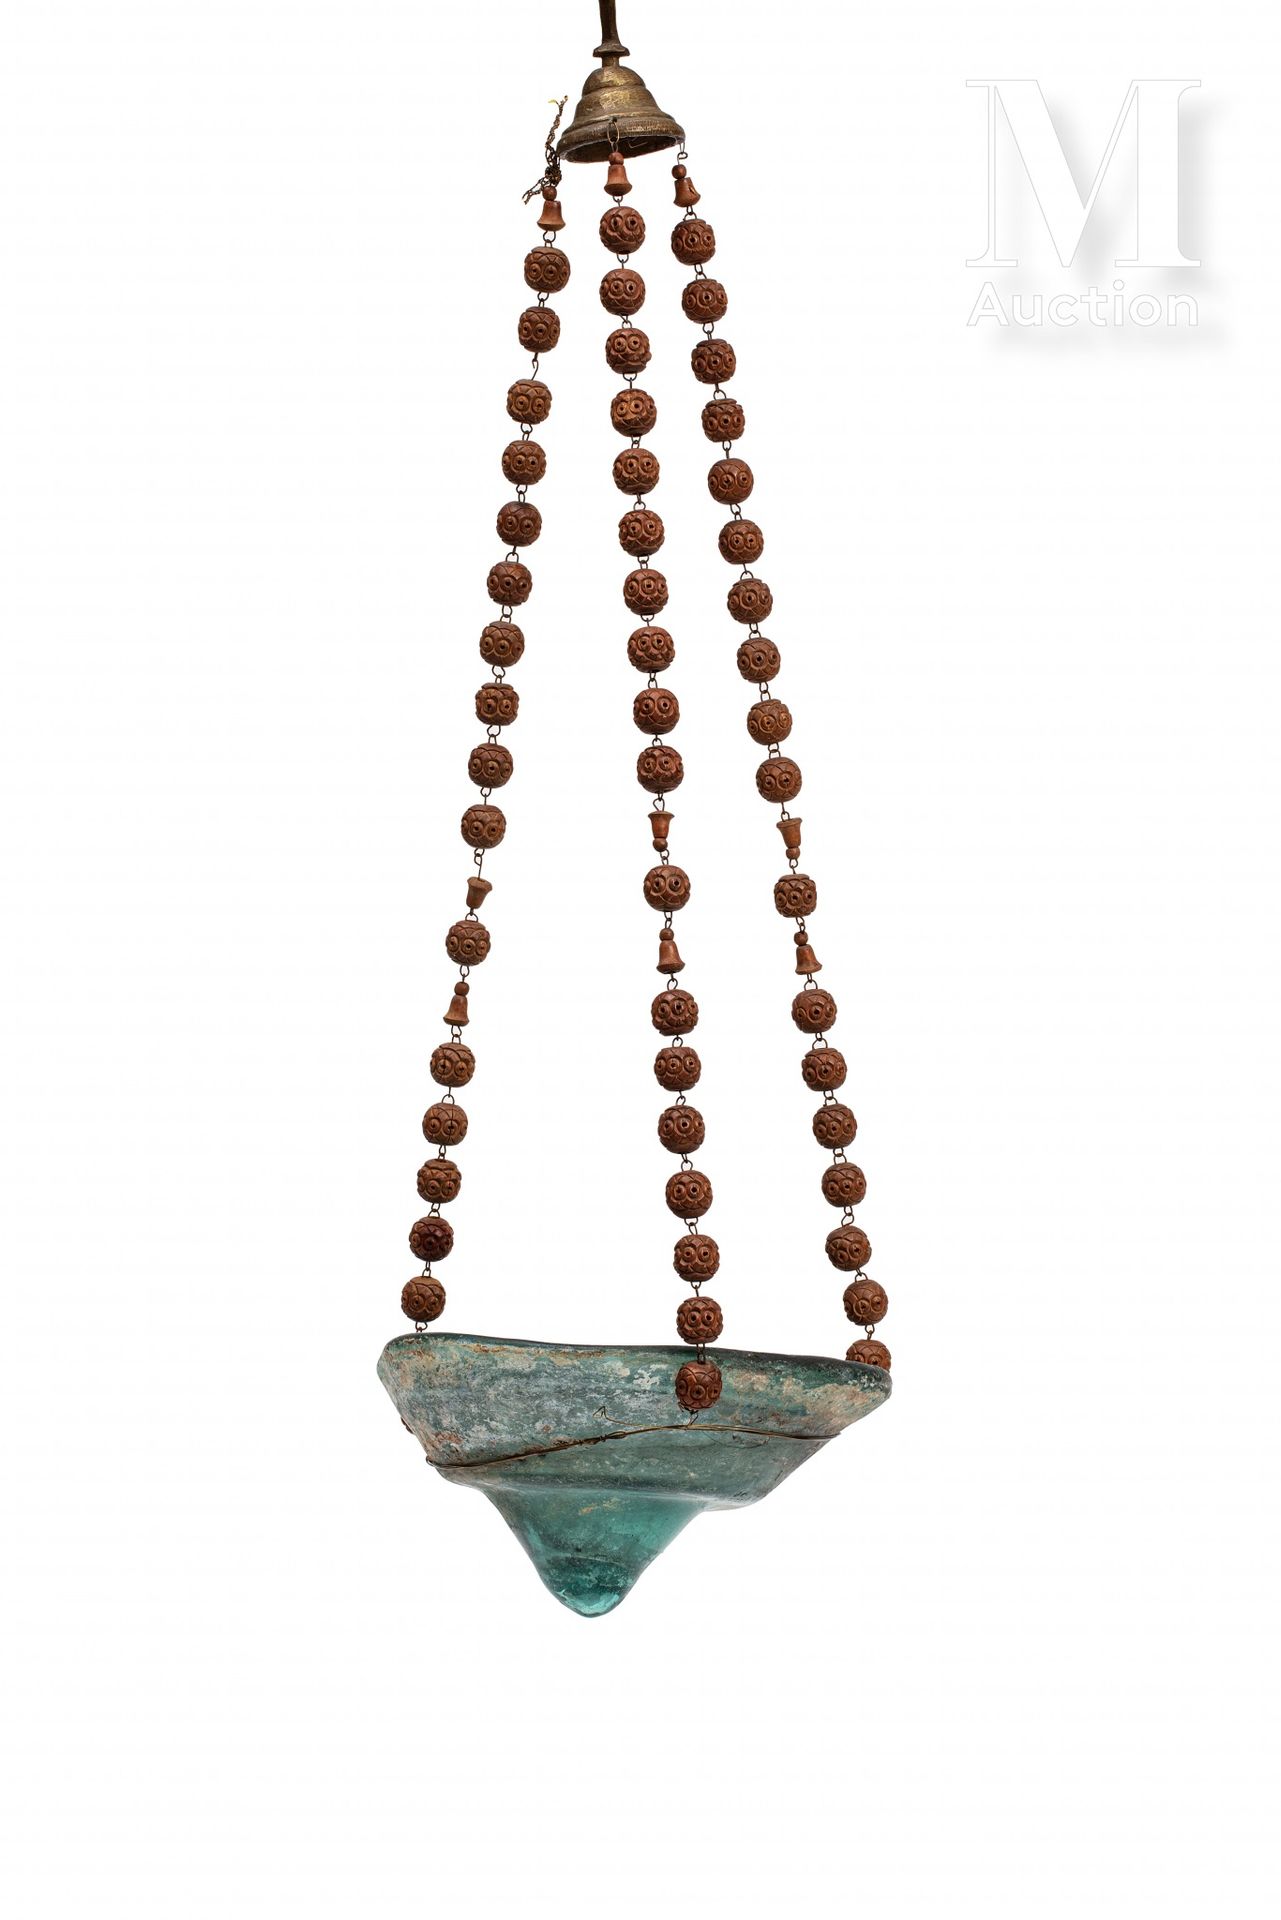 Lampe à huile 美索不达米亚或近东地区，8-10世纪

一种带有绿色阴影的模制玻璃，石灰石凝结物，用阿拉伯文刻成的库夫字。

一条装饰有雕刻的木珠的&hellip;